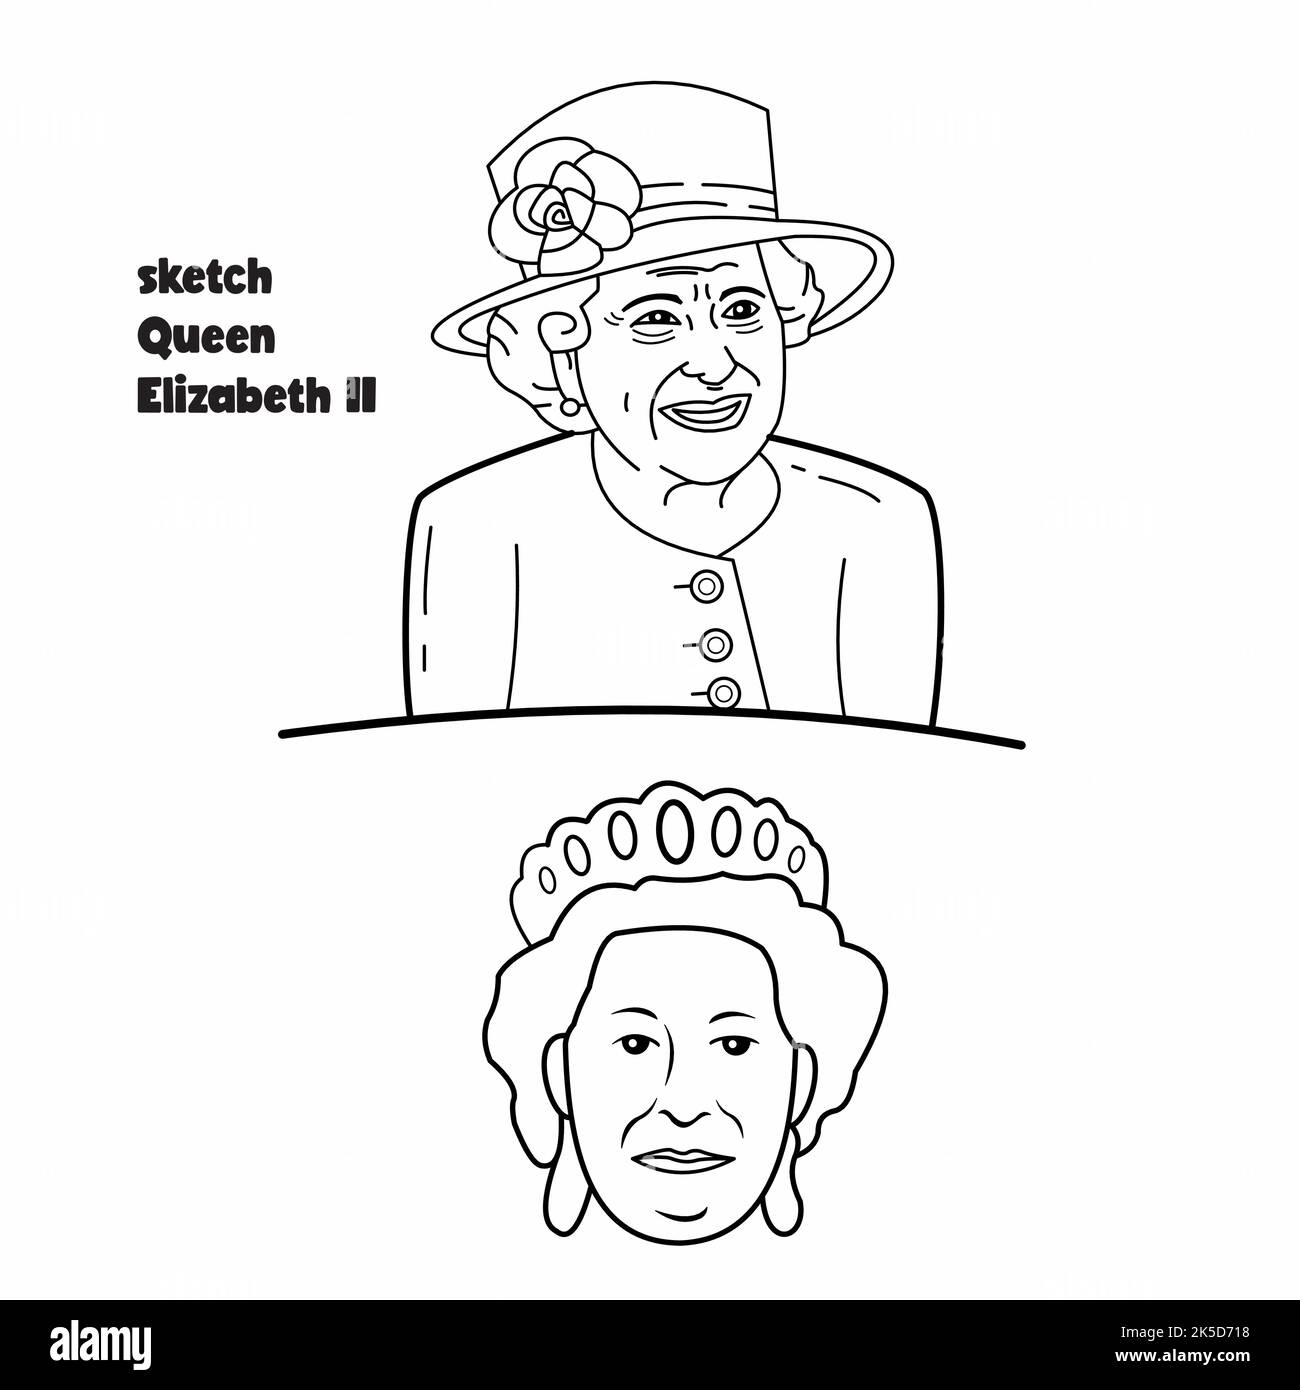 Queen Elizabeth II sketch for your learn drawing Stock Vector